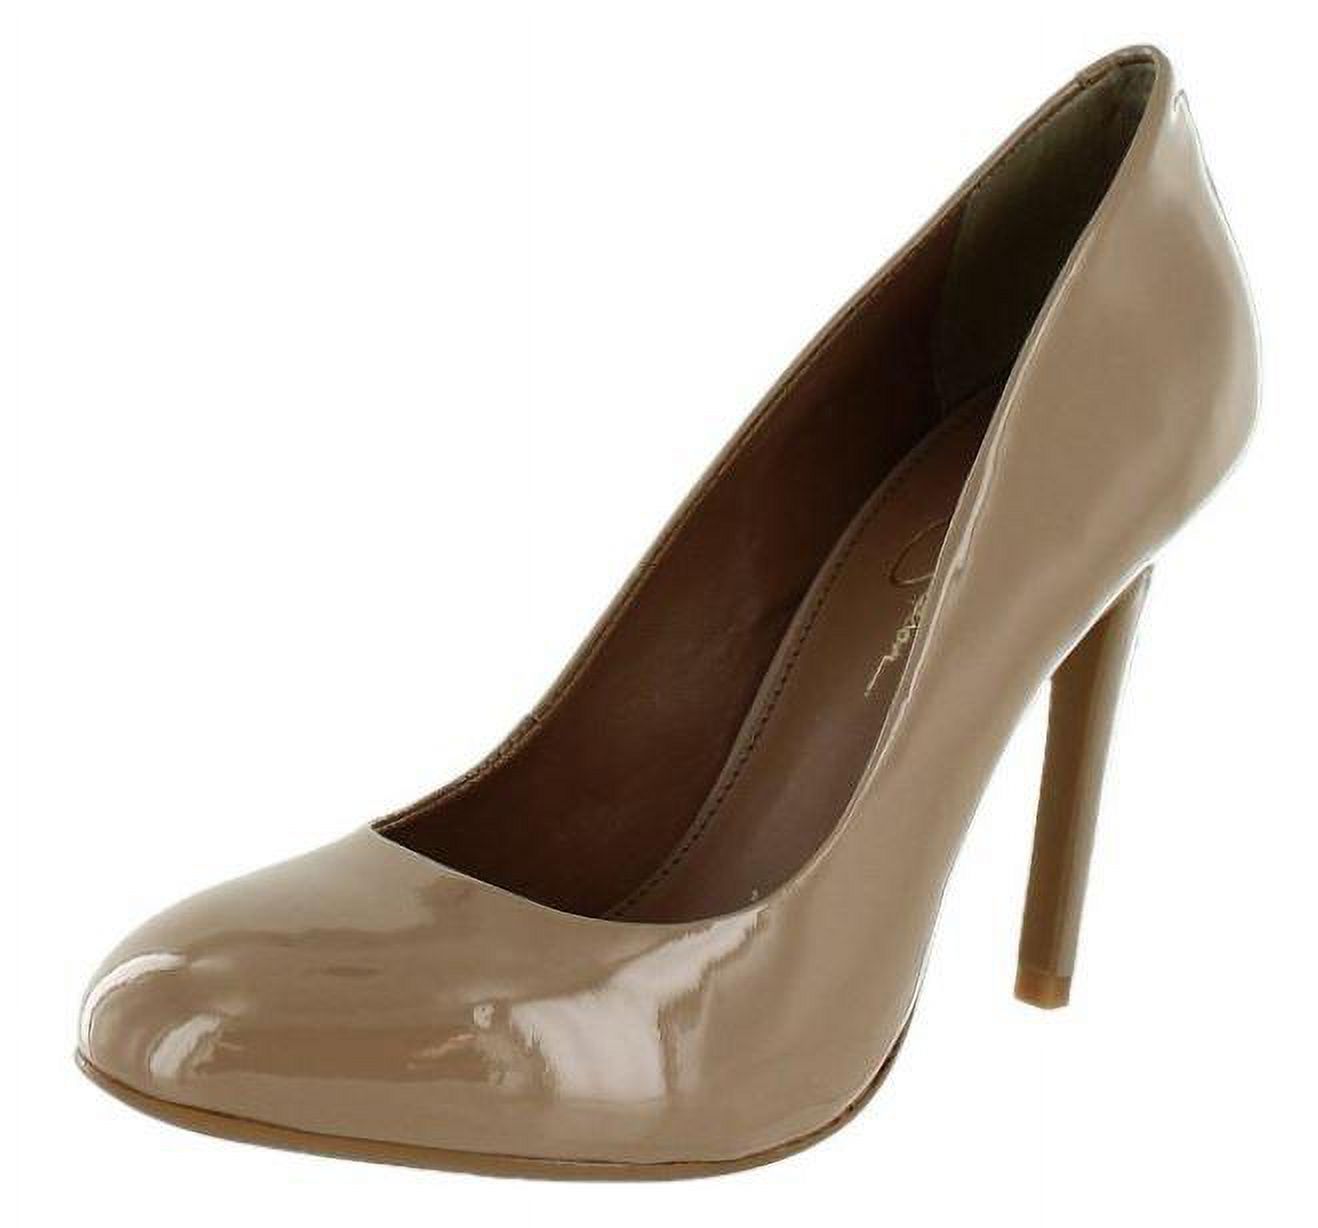 Jessica Simpson Shirley Women's Dress Pumps Classic Platforms Heels - image 1 of 1